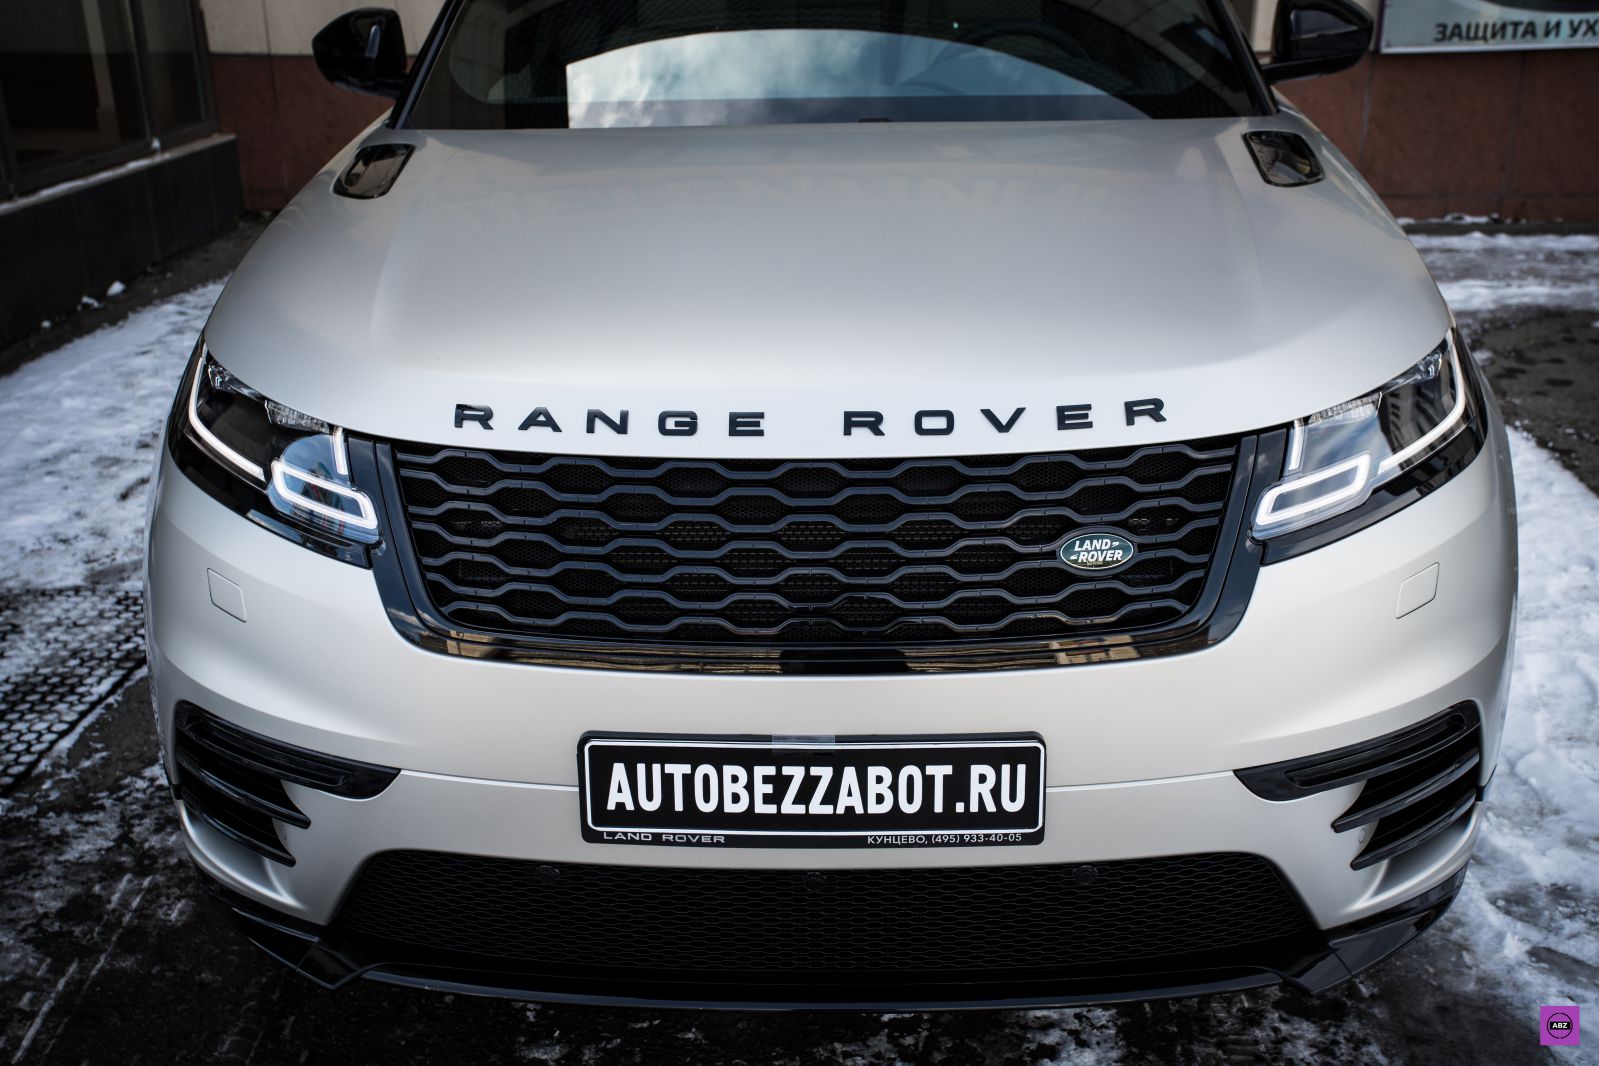 Фото бронирования фар автомобиля Range Rover Velar